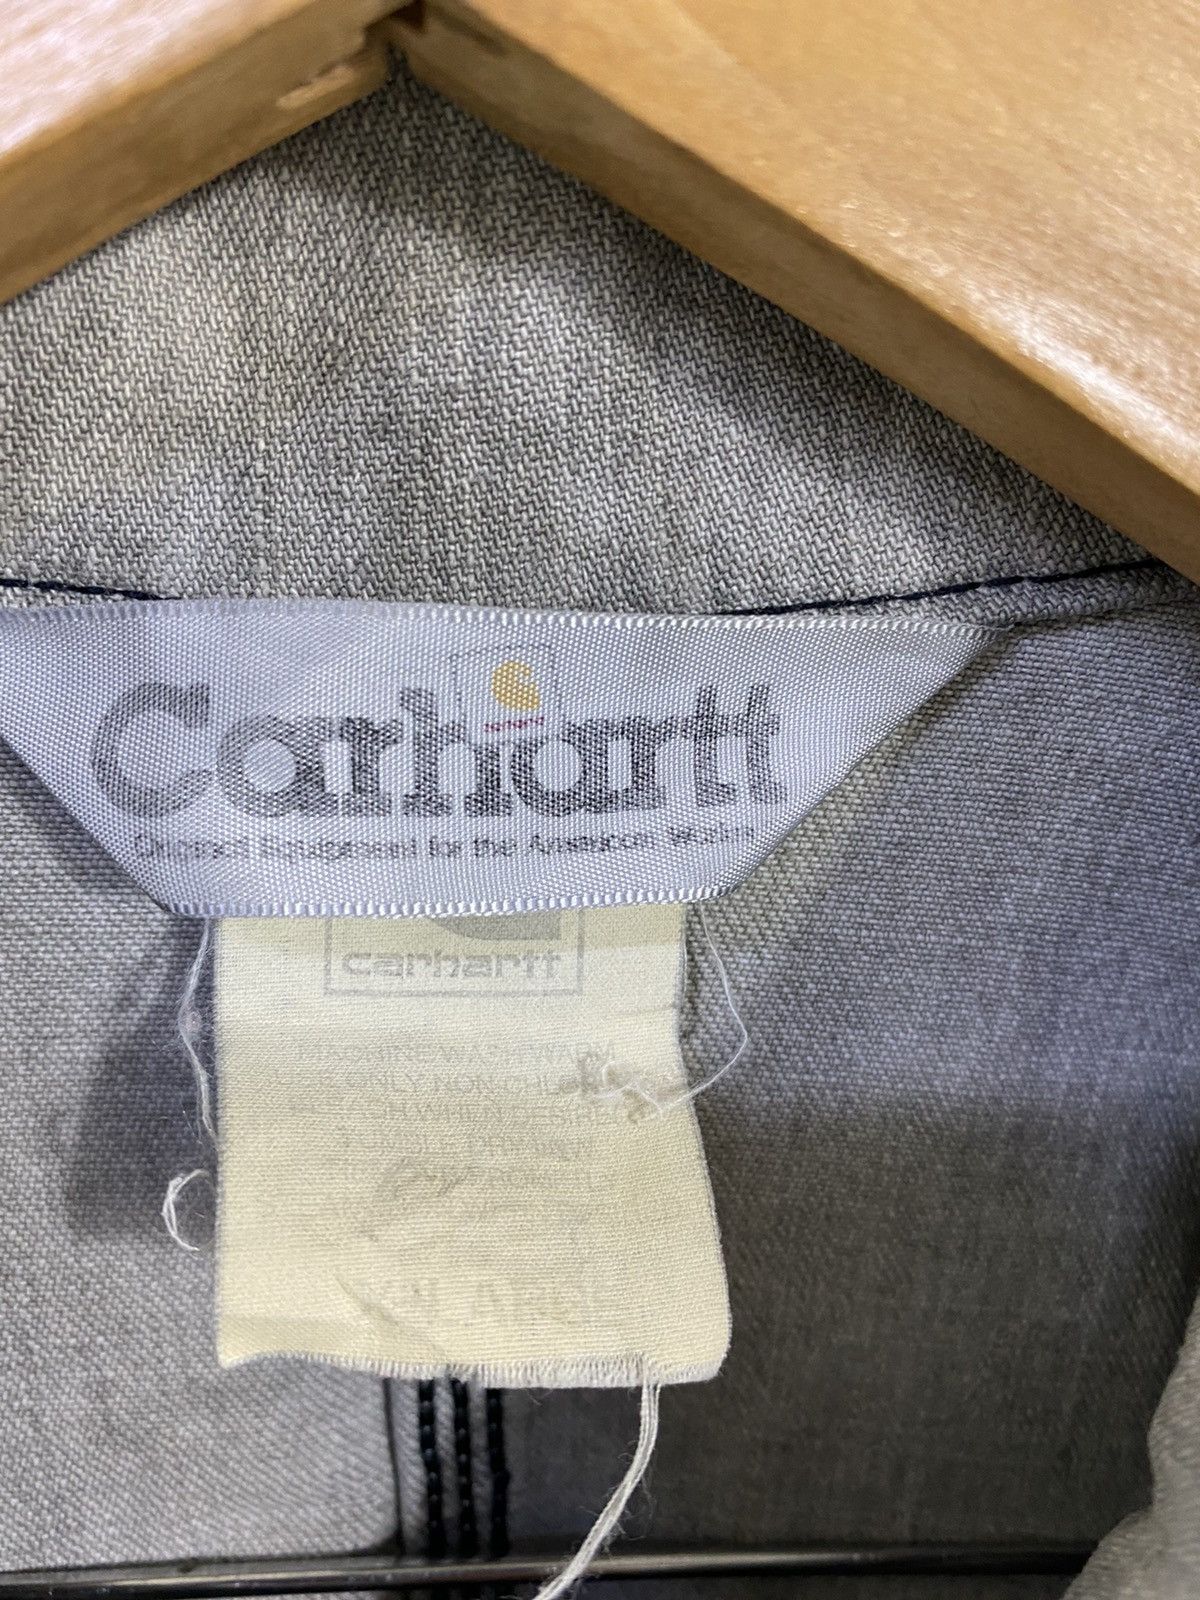 Carhartt Chore Jacket Four Pocket Design Button Up - 4